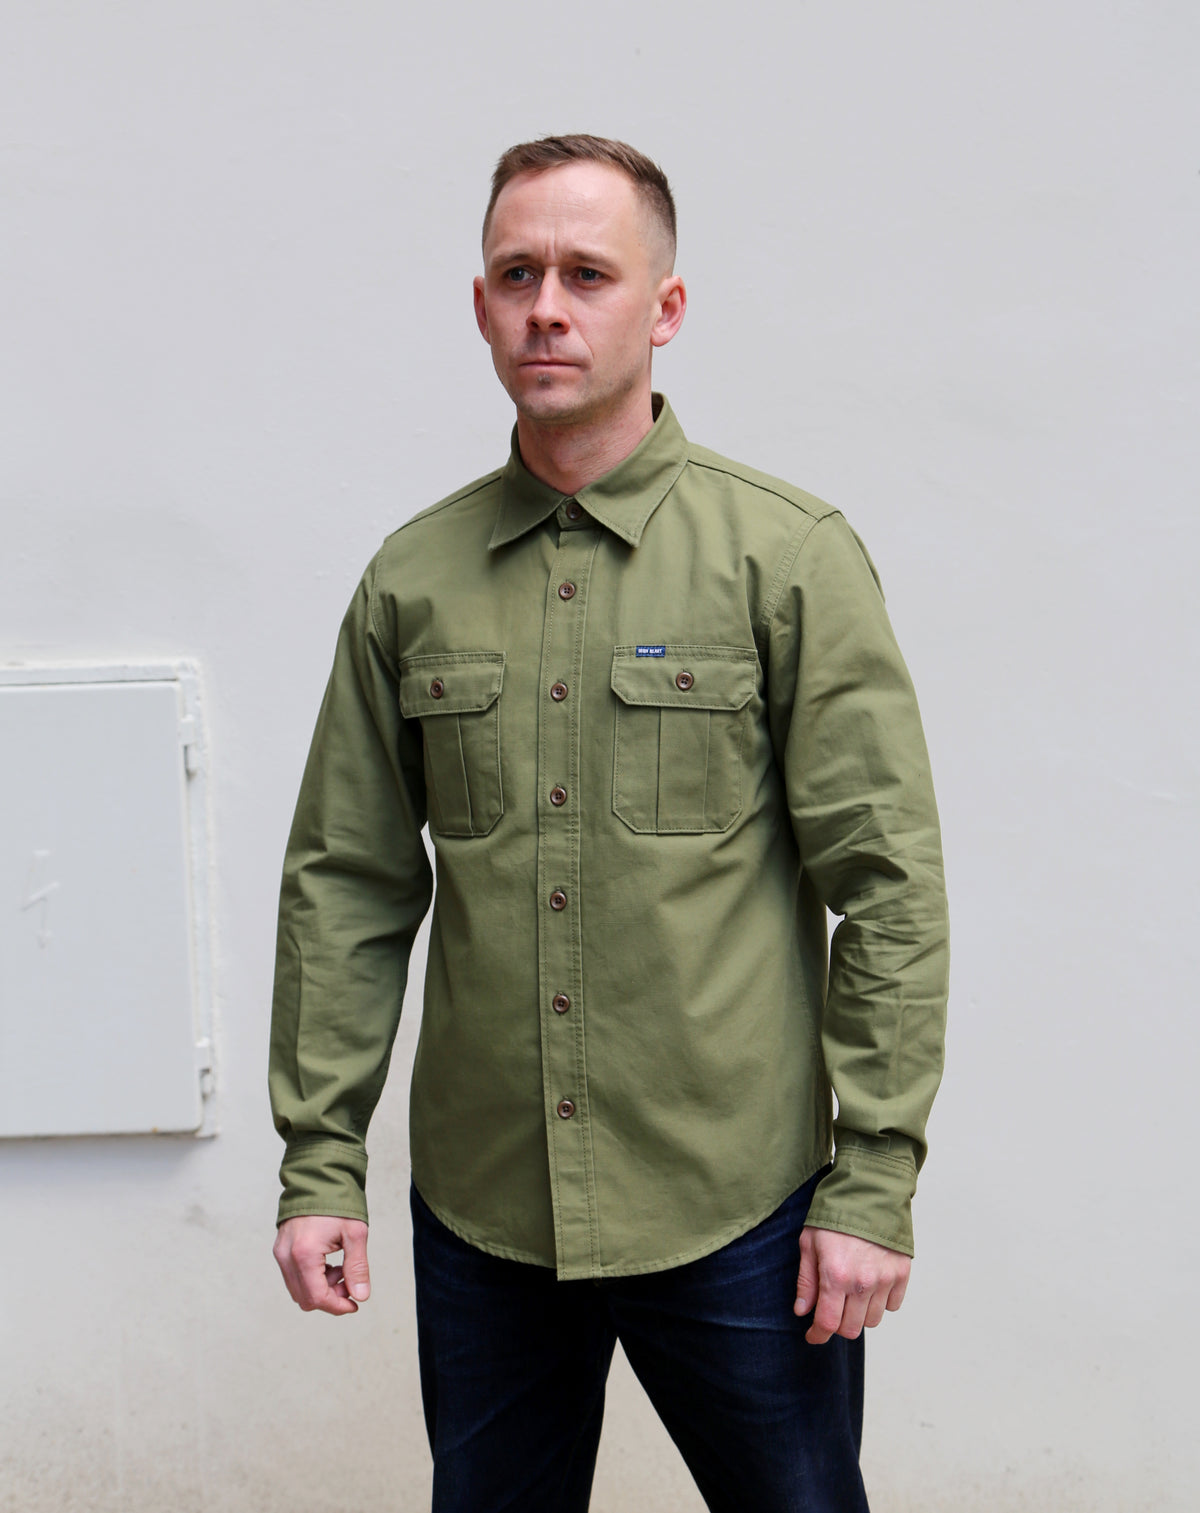 Iron Heart IHSH-354-ODG 9oz Military Shirt Olive Drab Green